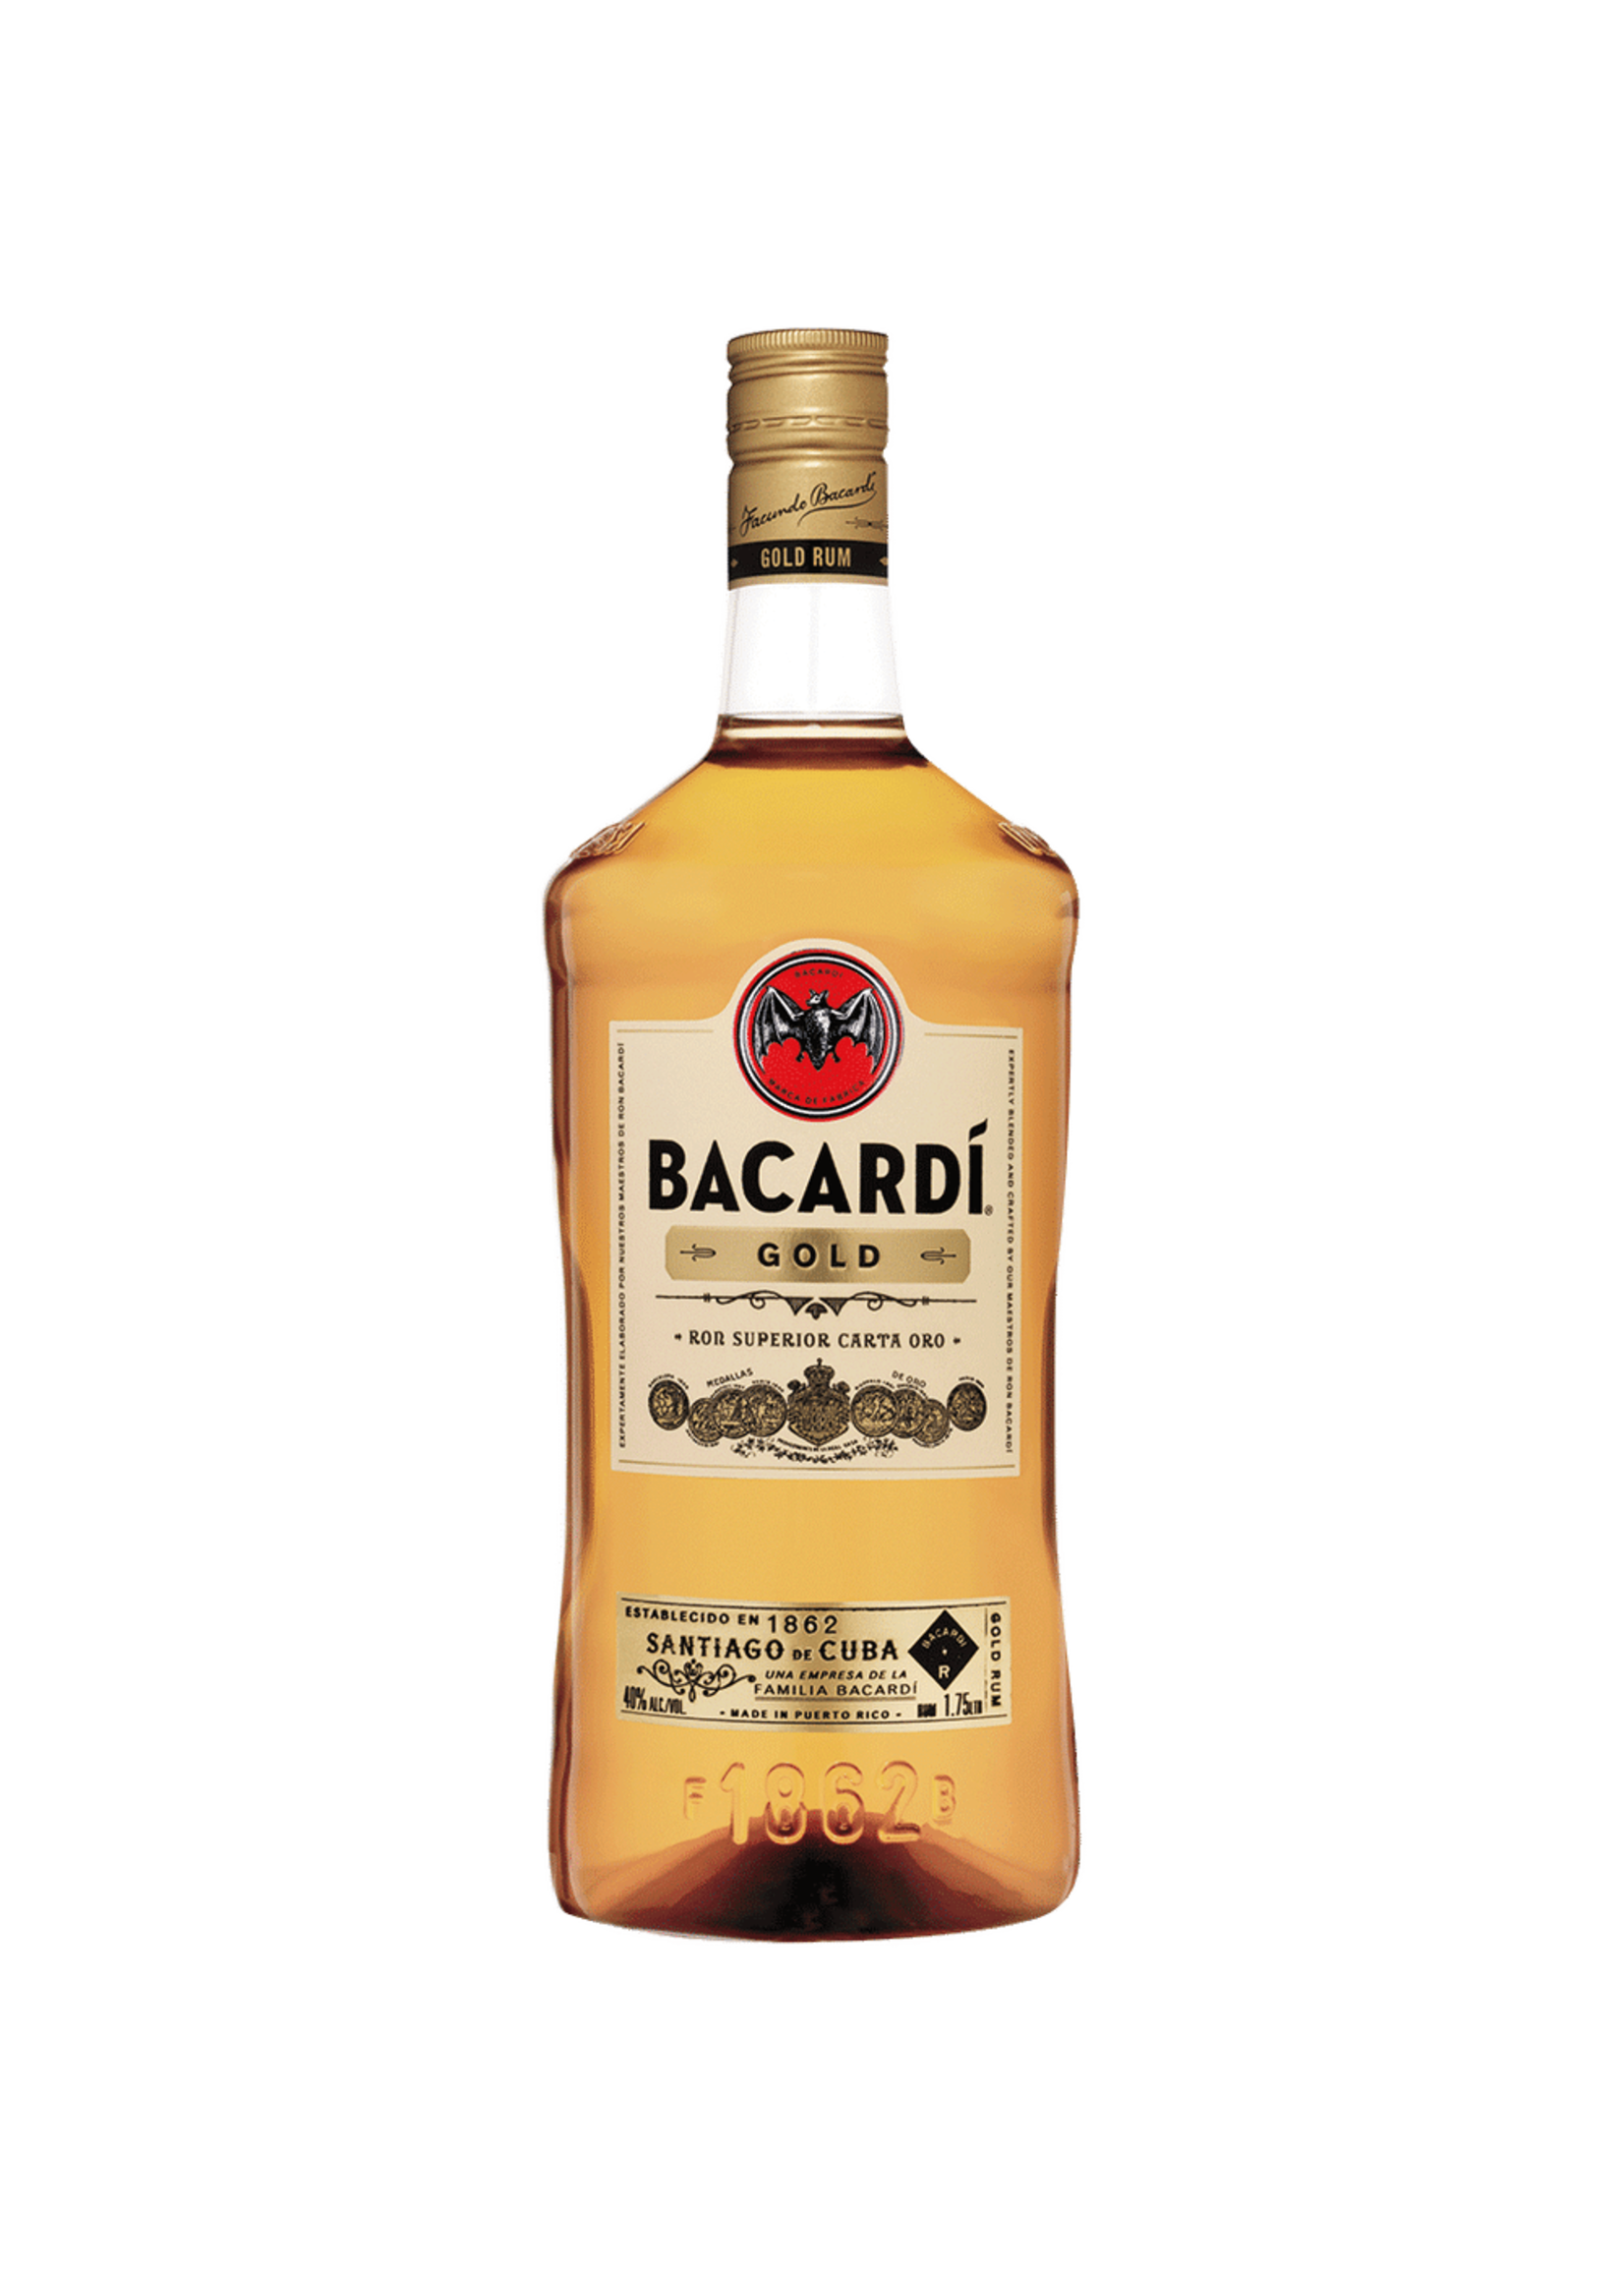 Bacardi Bacardi Gold Rum 80Proof 1.75 Ltr